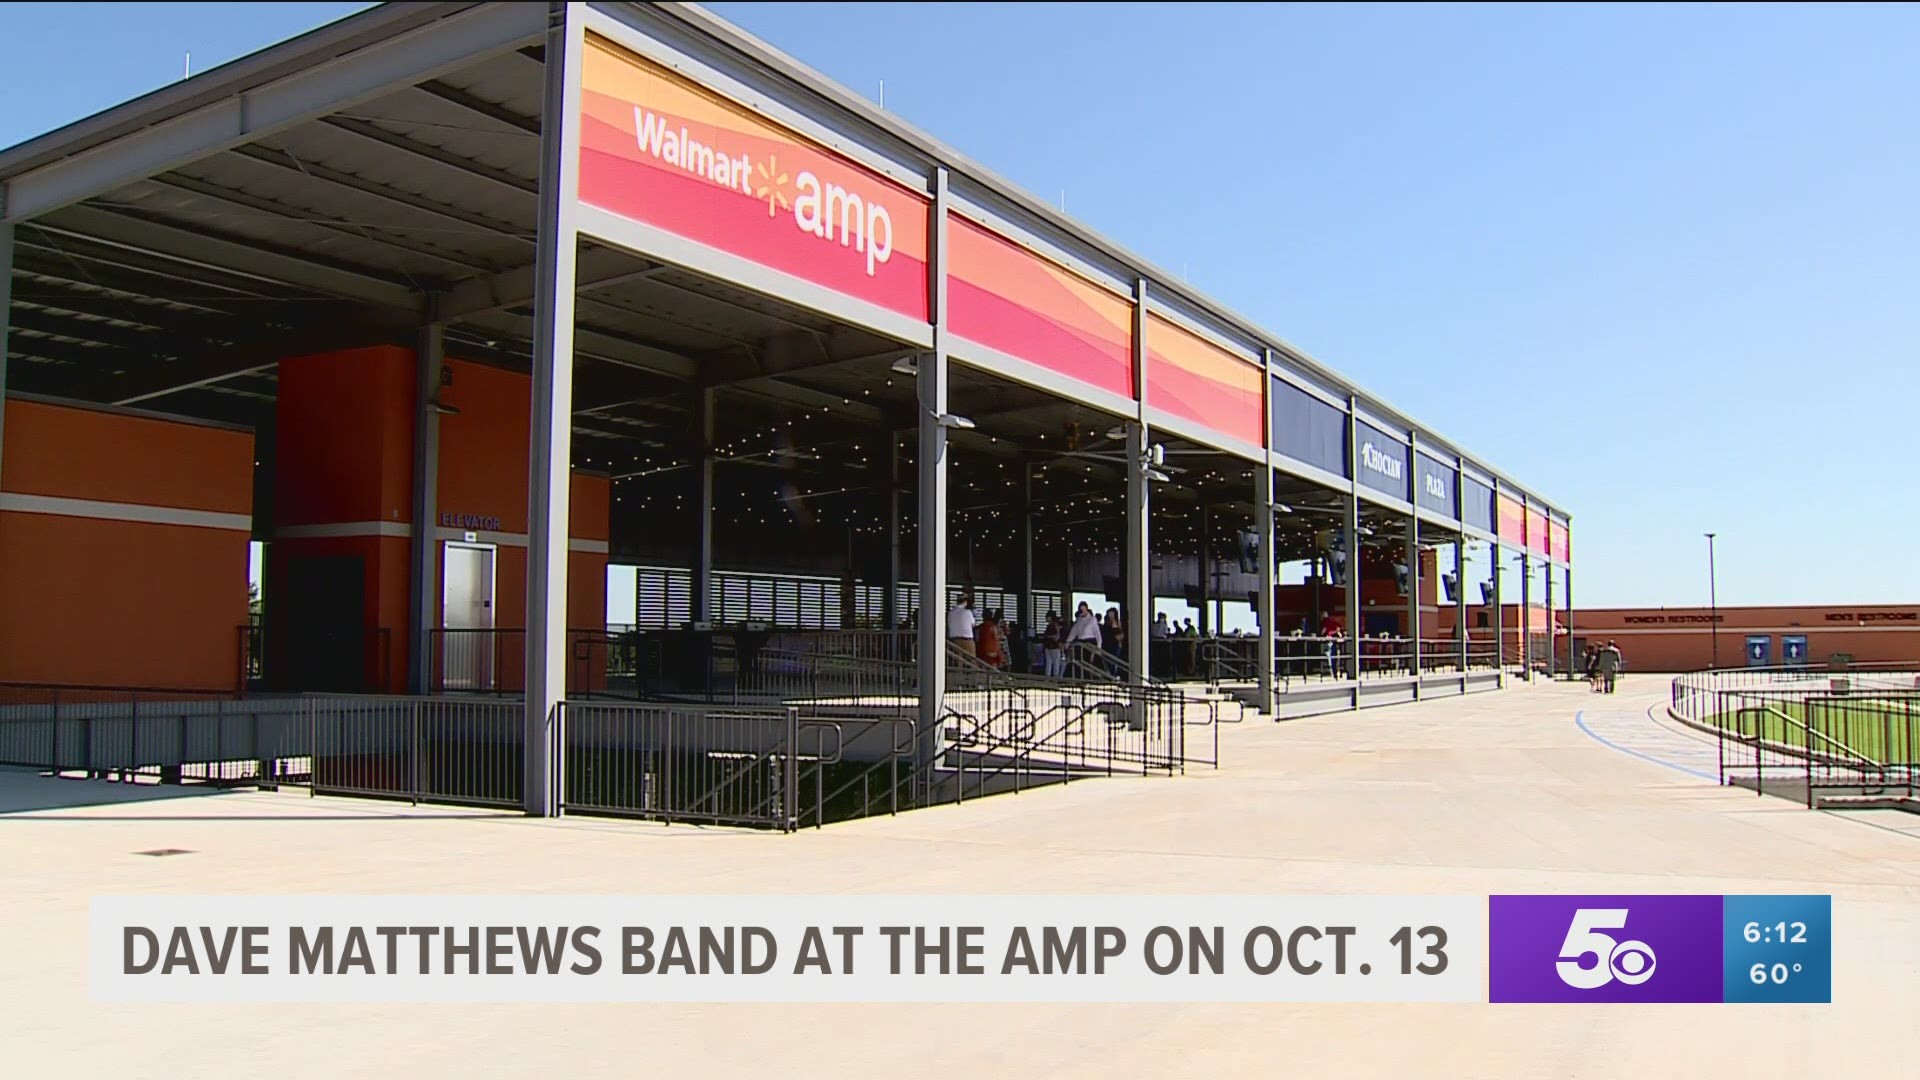 Dave Mathews Ban concert at Walmart AMP rescheduled to Oct. 13